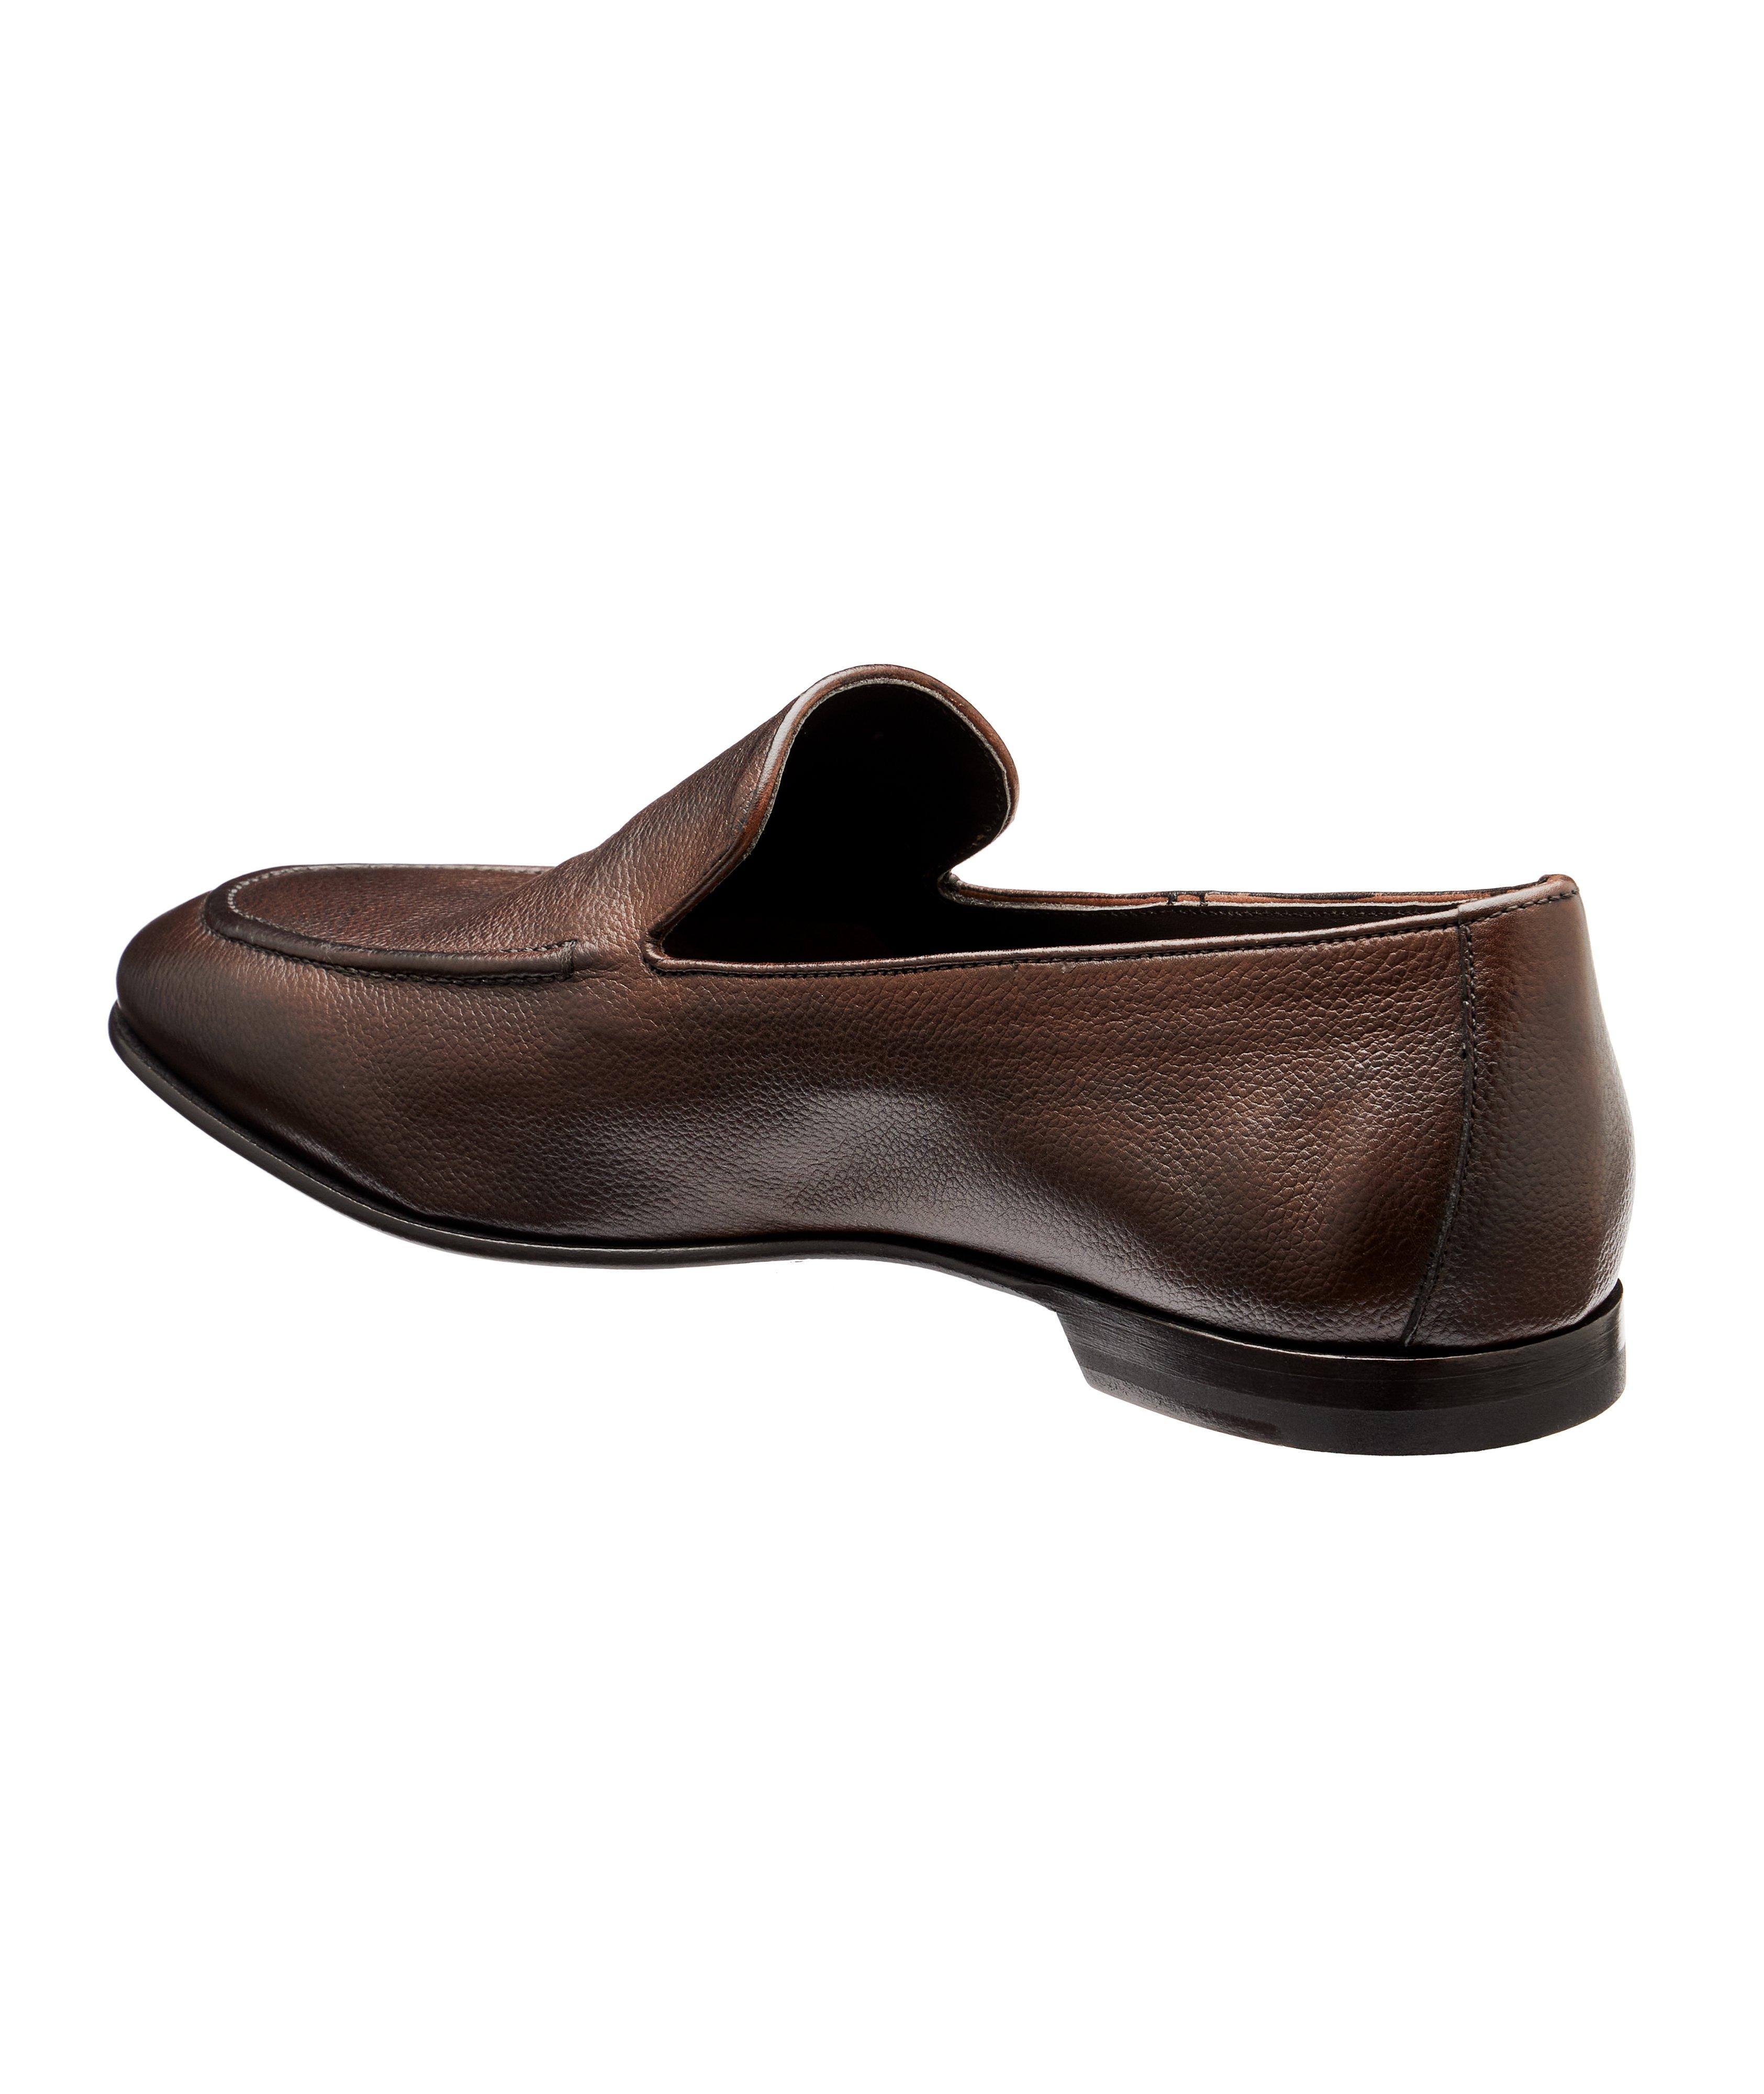 Thorpe Leather Loafer image 1